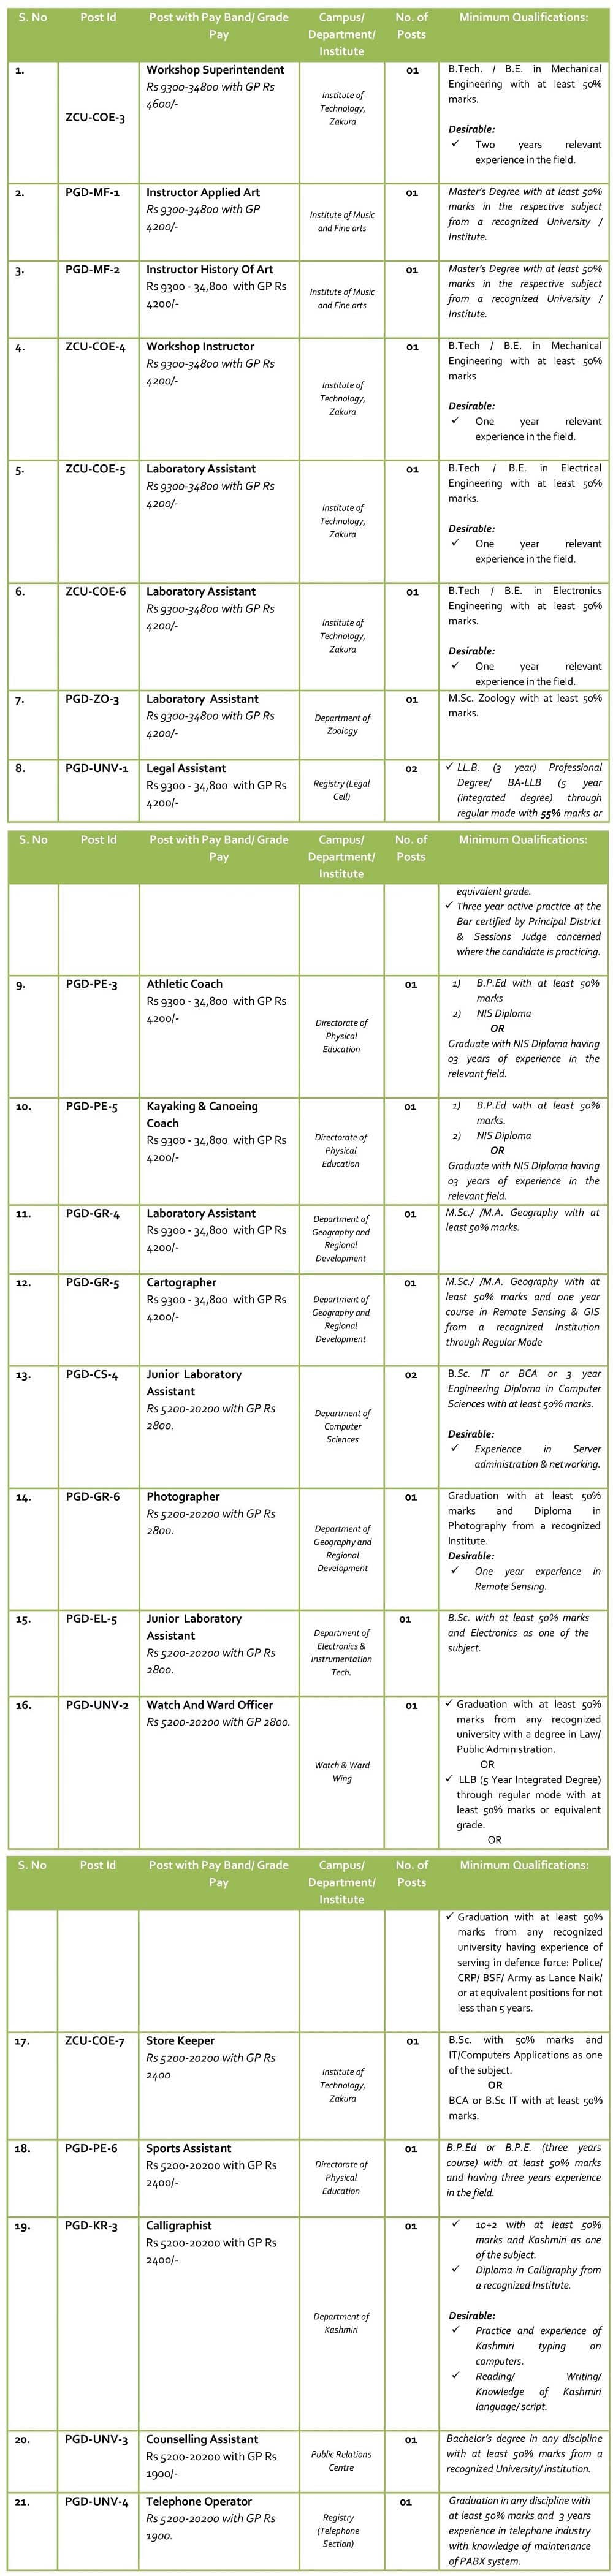 Kashmir University Recruitment 2018 for 23 Non-Teaching Posts - Post-Wise Details